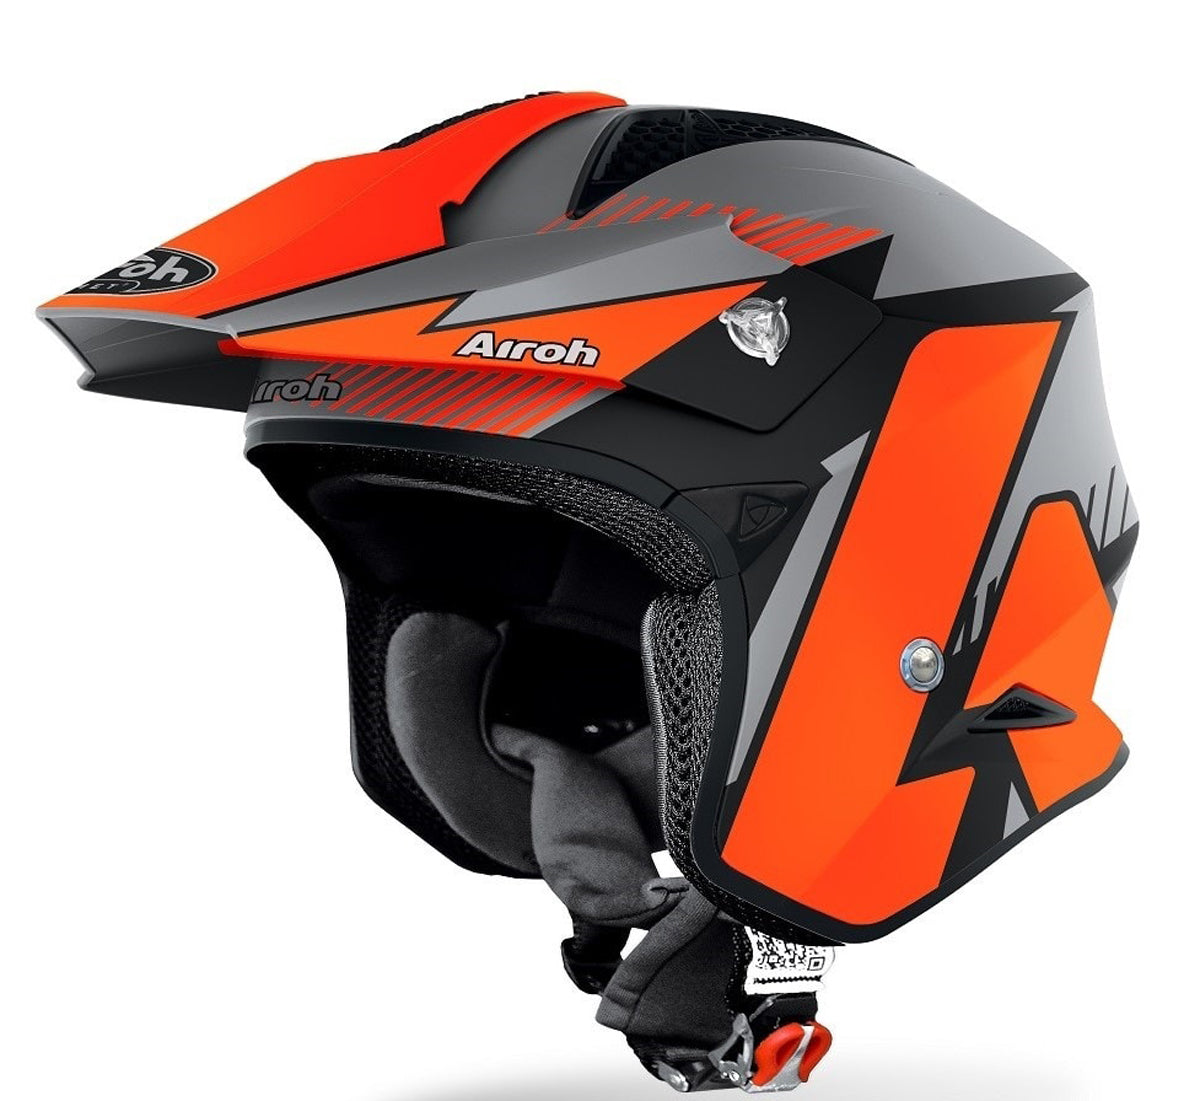 Airoh TRR Trials Helmet Pure Oarnge Matt